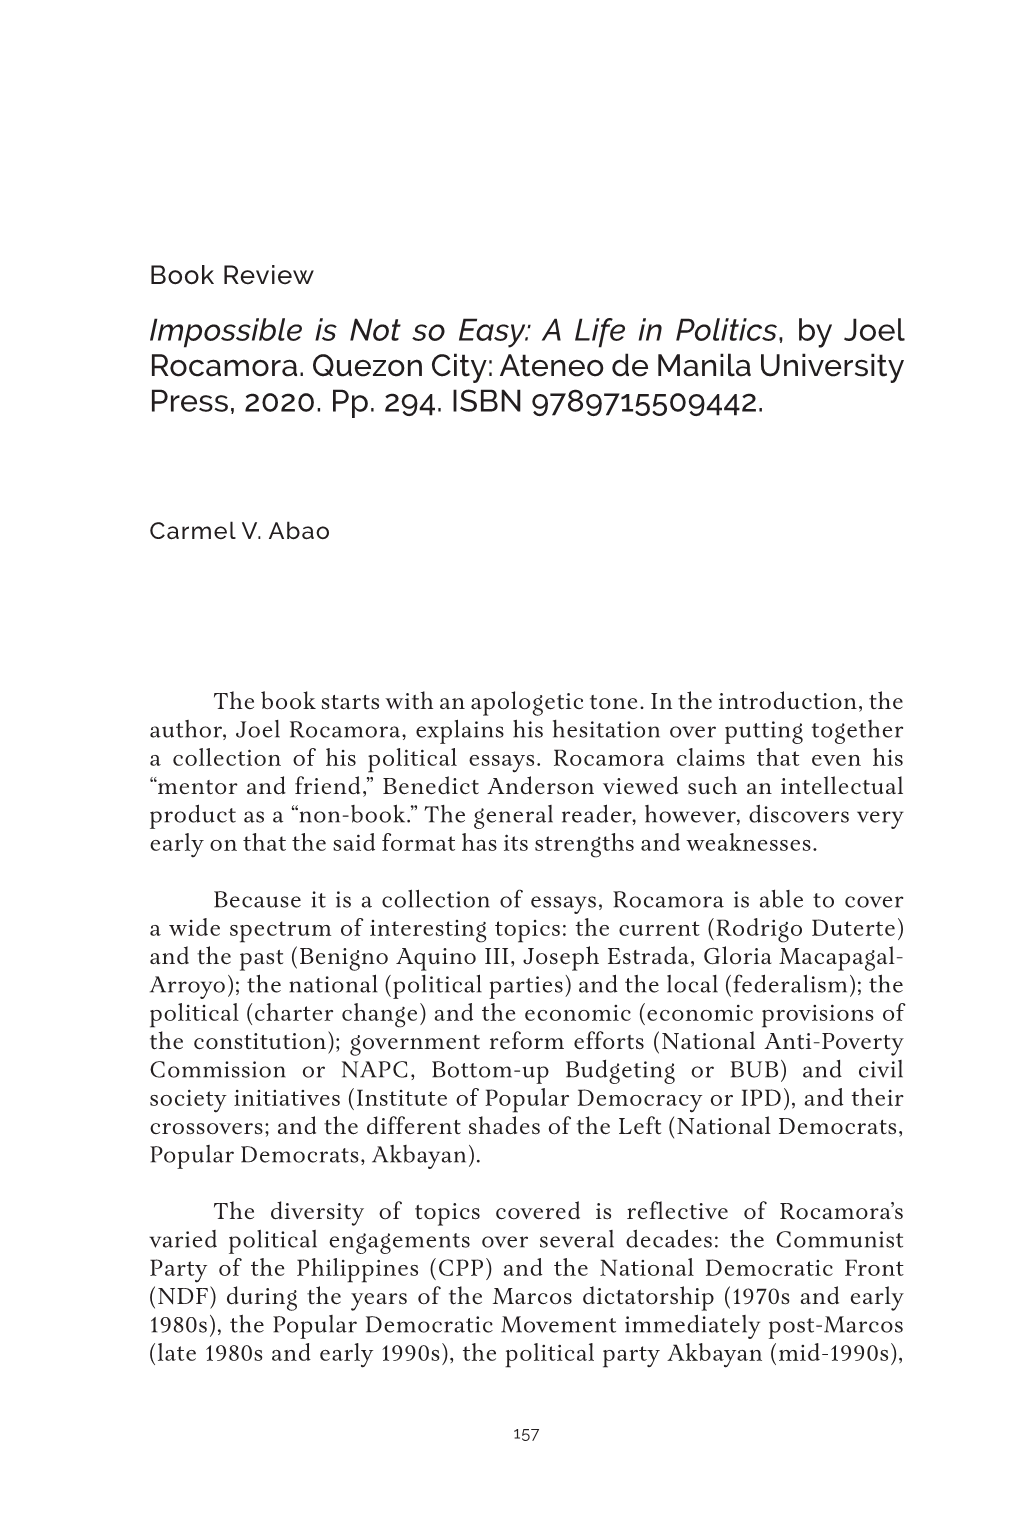 A Life in Politics, by Joel Rocamora. Quezon City: Ateneo De Manila University Press, 2020